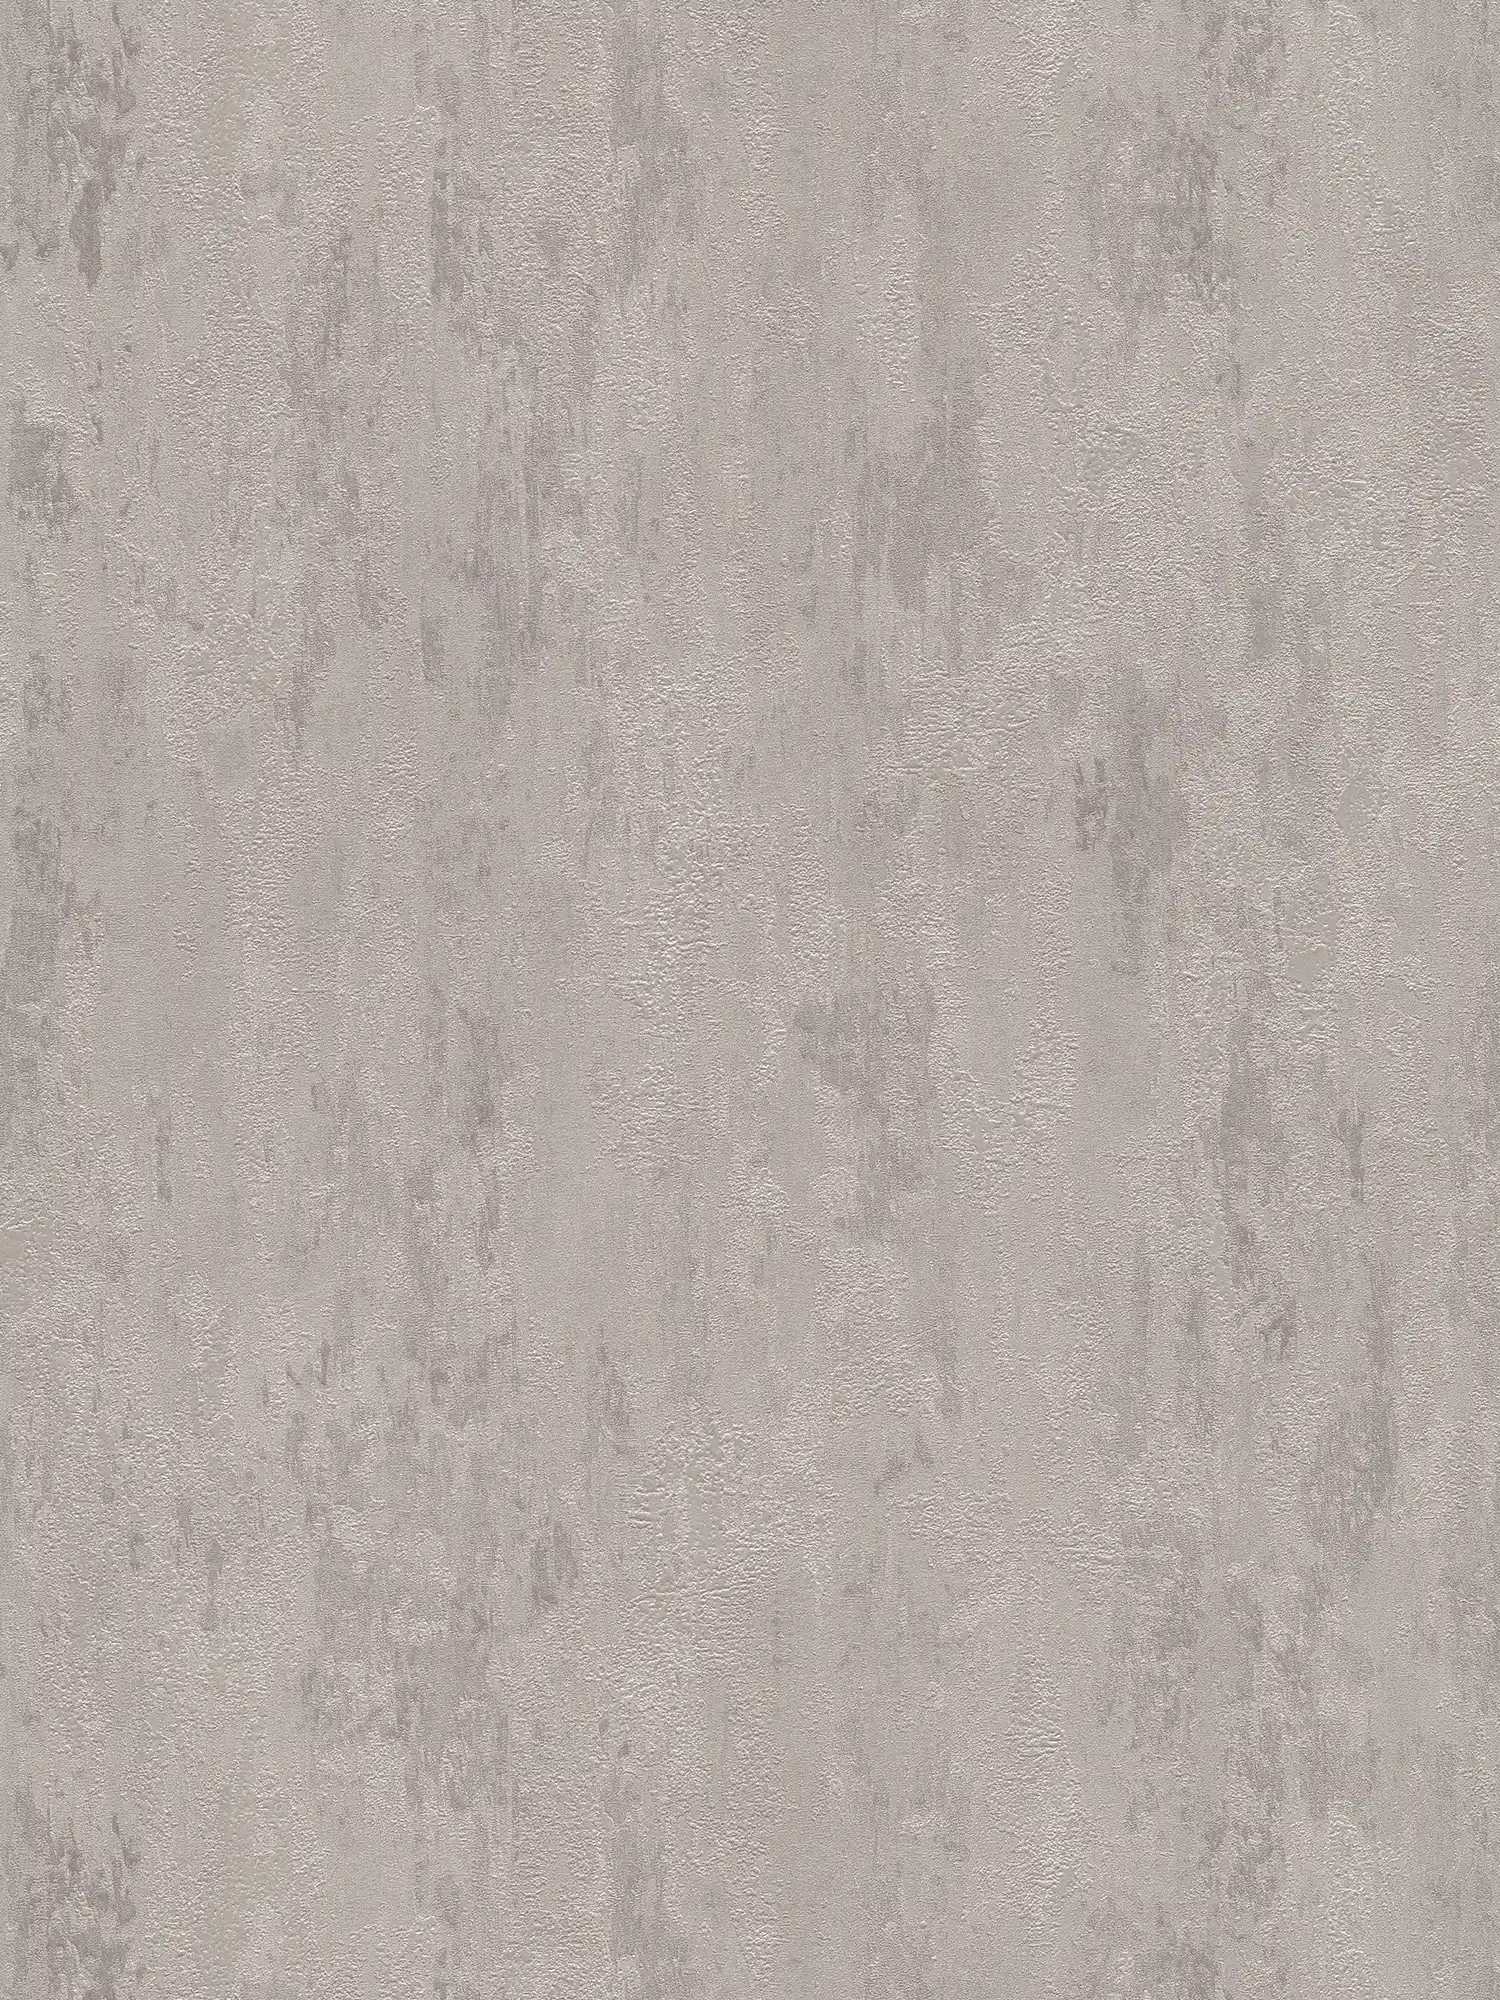 Wallpaper industrial style with texture effect - cream, grey, metallic
